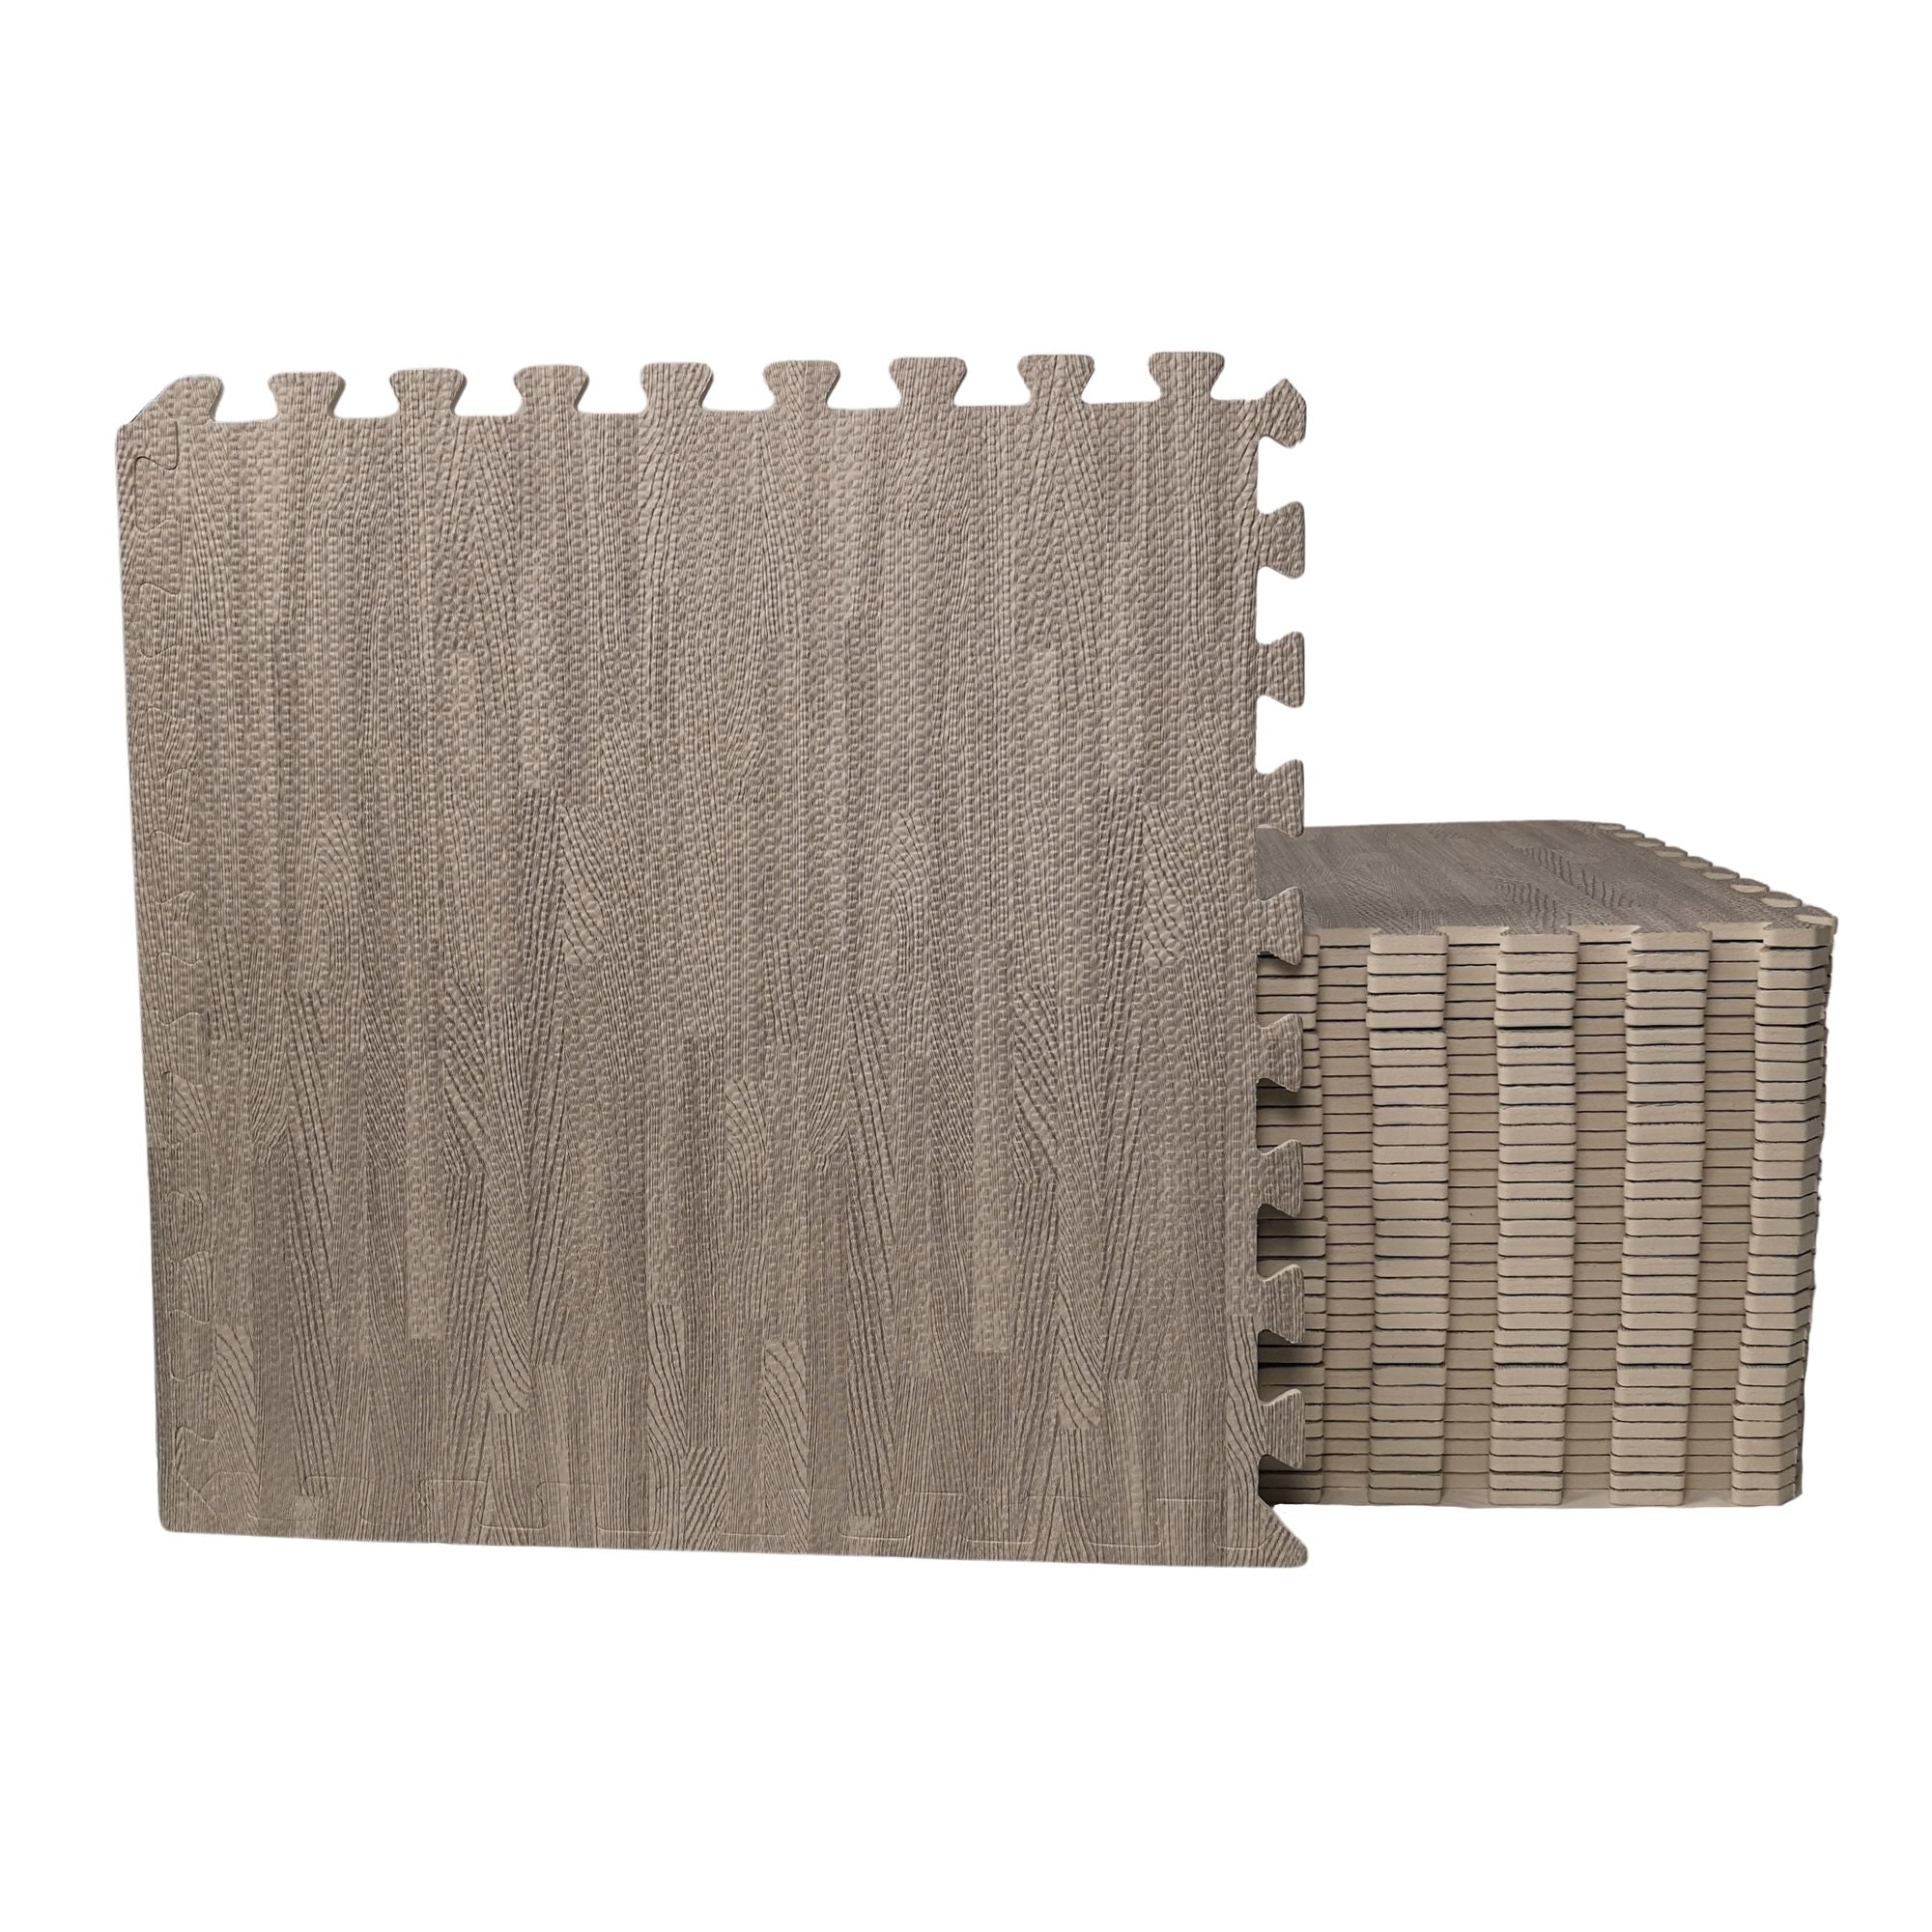 8 Piece Grey Wood Effect EVA Foam Floor Protective Floor Tiles / Mats 60x60cm Each Set For Gyms, Kitchens, Garages, Camping, Kids Play Matting, Flooring Mats Set Covers 2.88 sqm (31 sq ft)